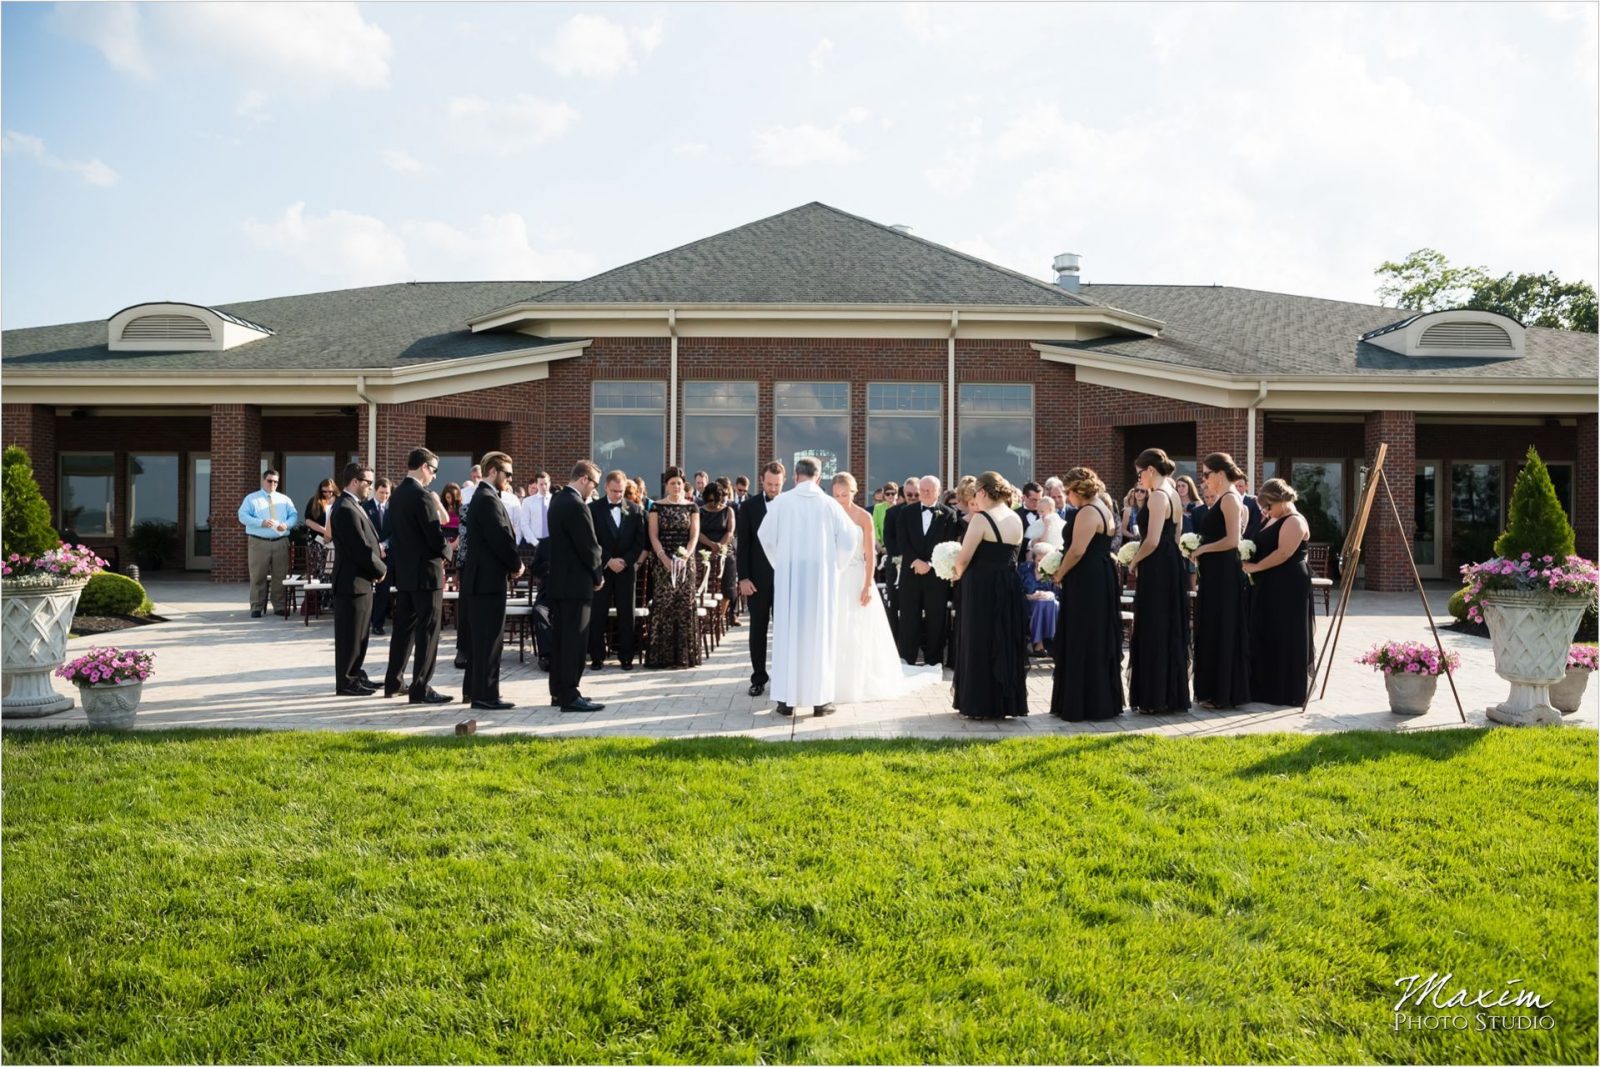 Drees Pavilion Covington Kentucky Wedding Ceremony